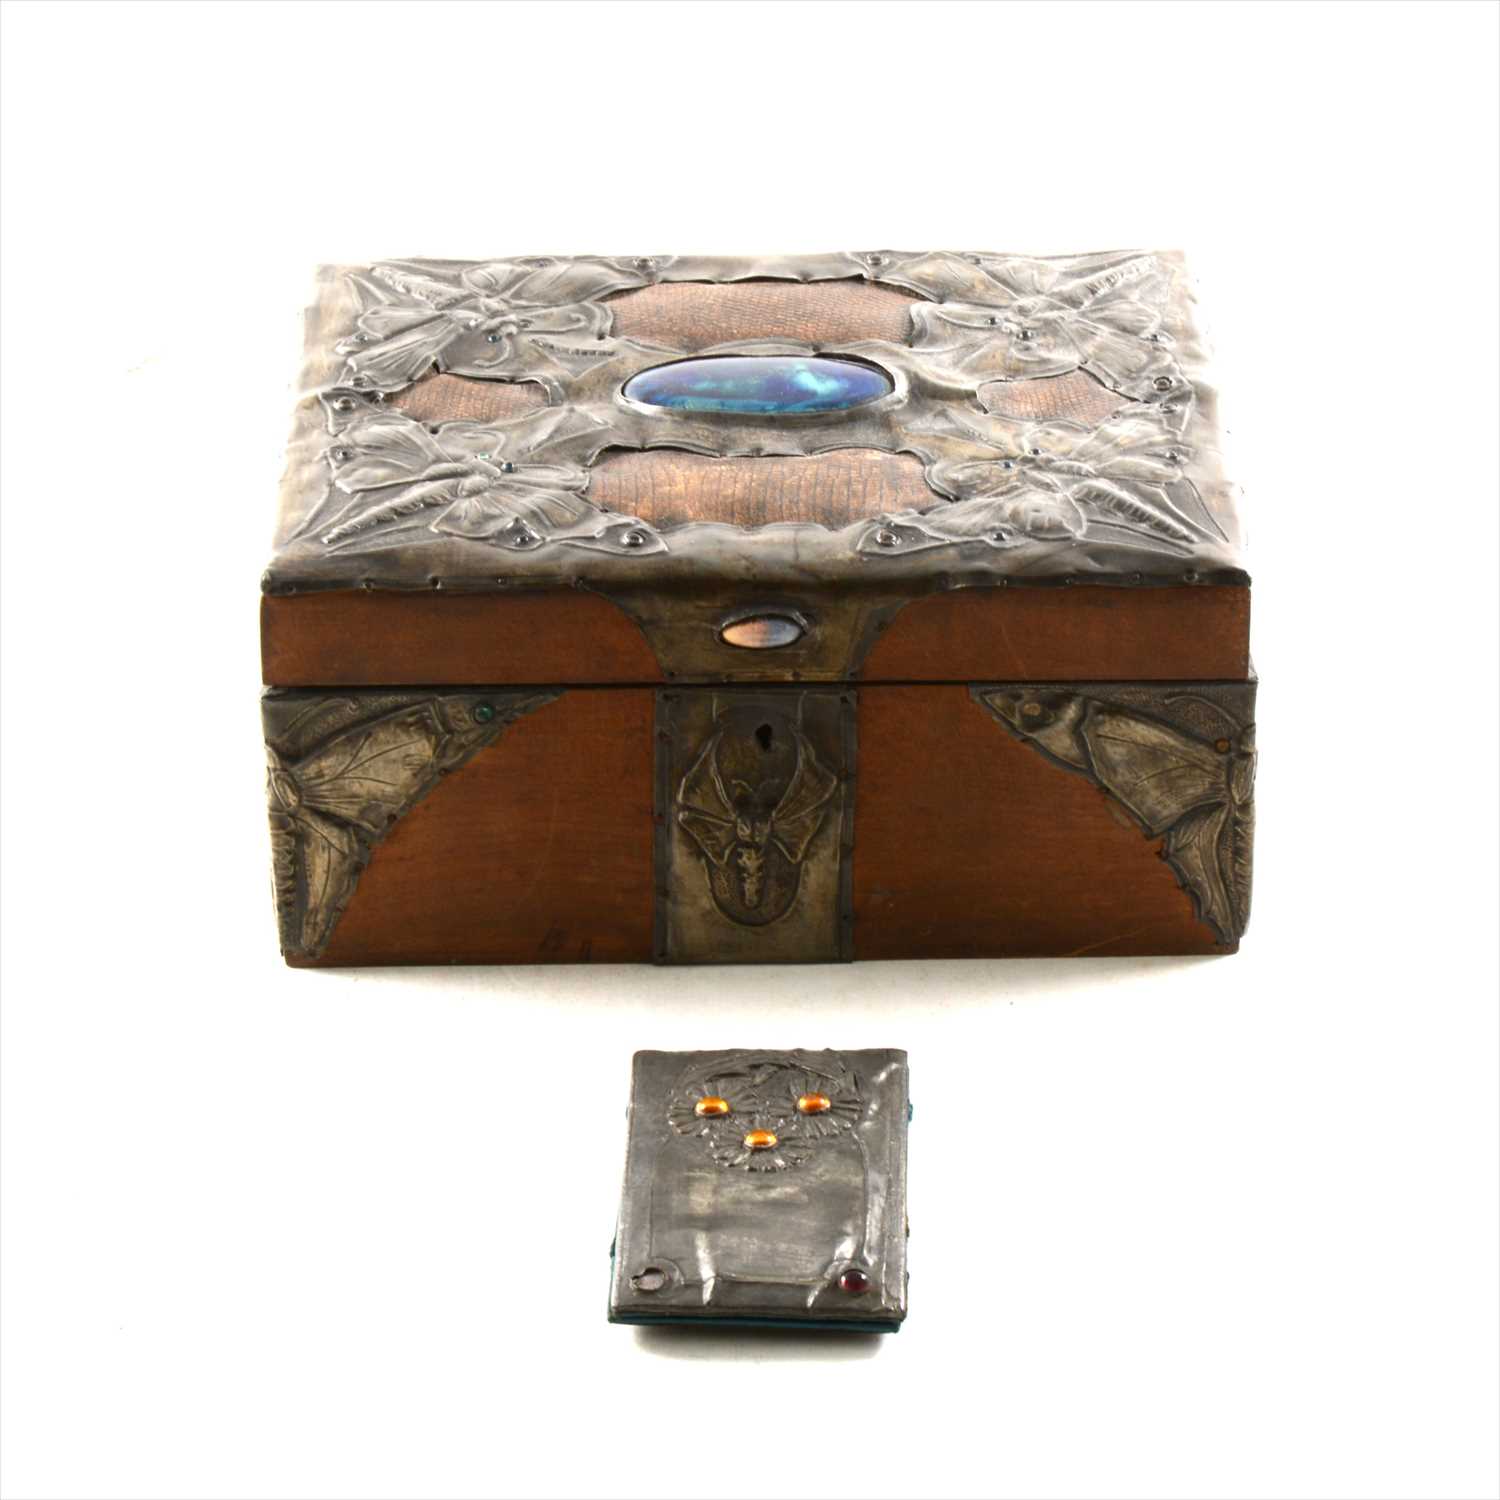 Lot 114 - An Art Nouveau pewter mounter box, and similar card case.